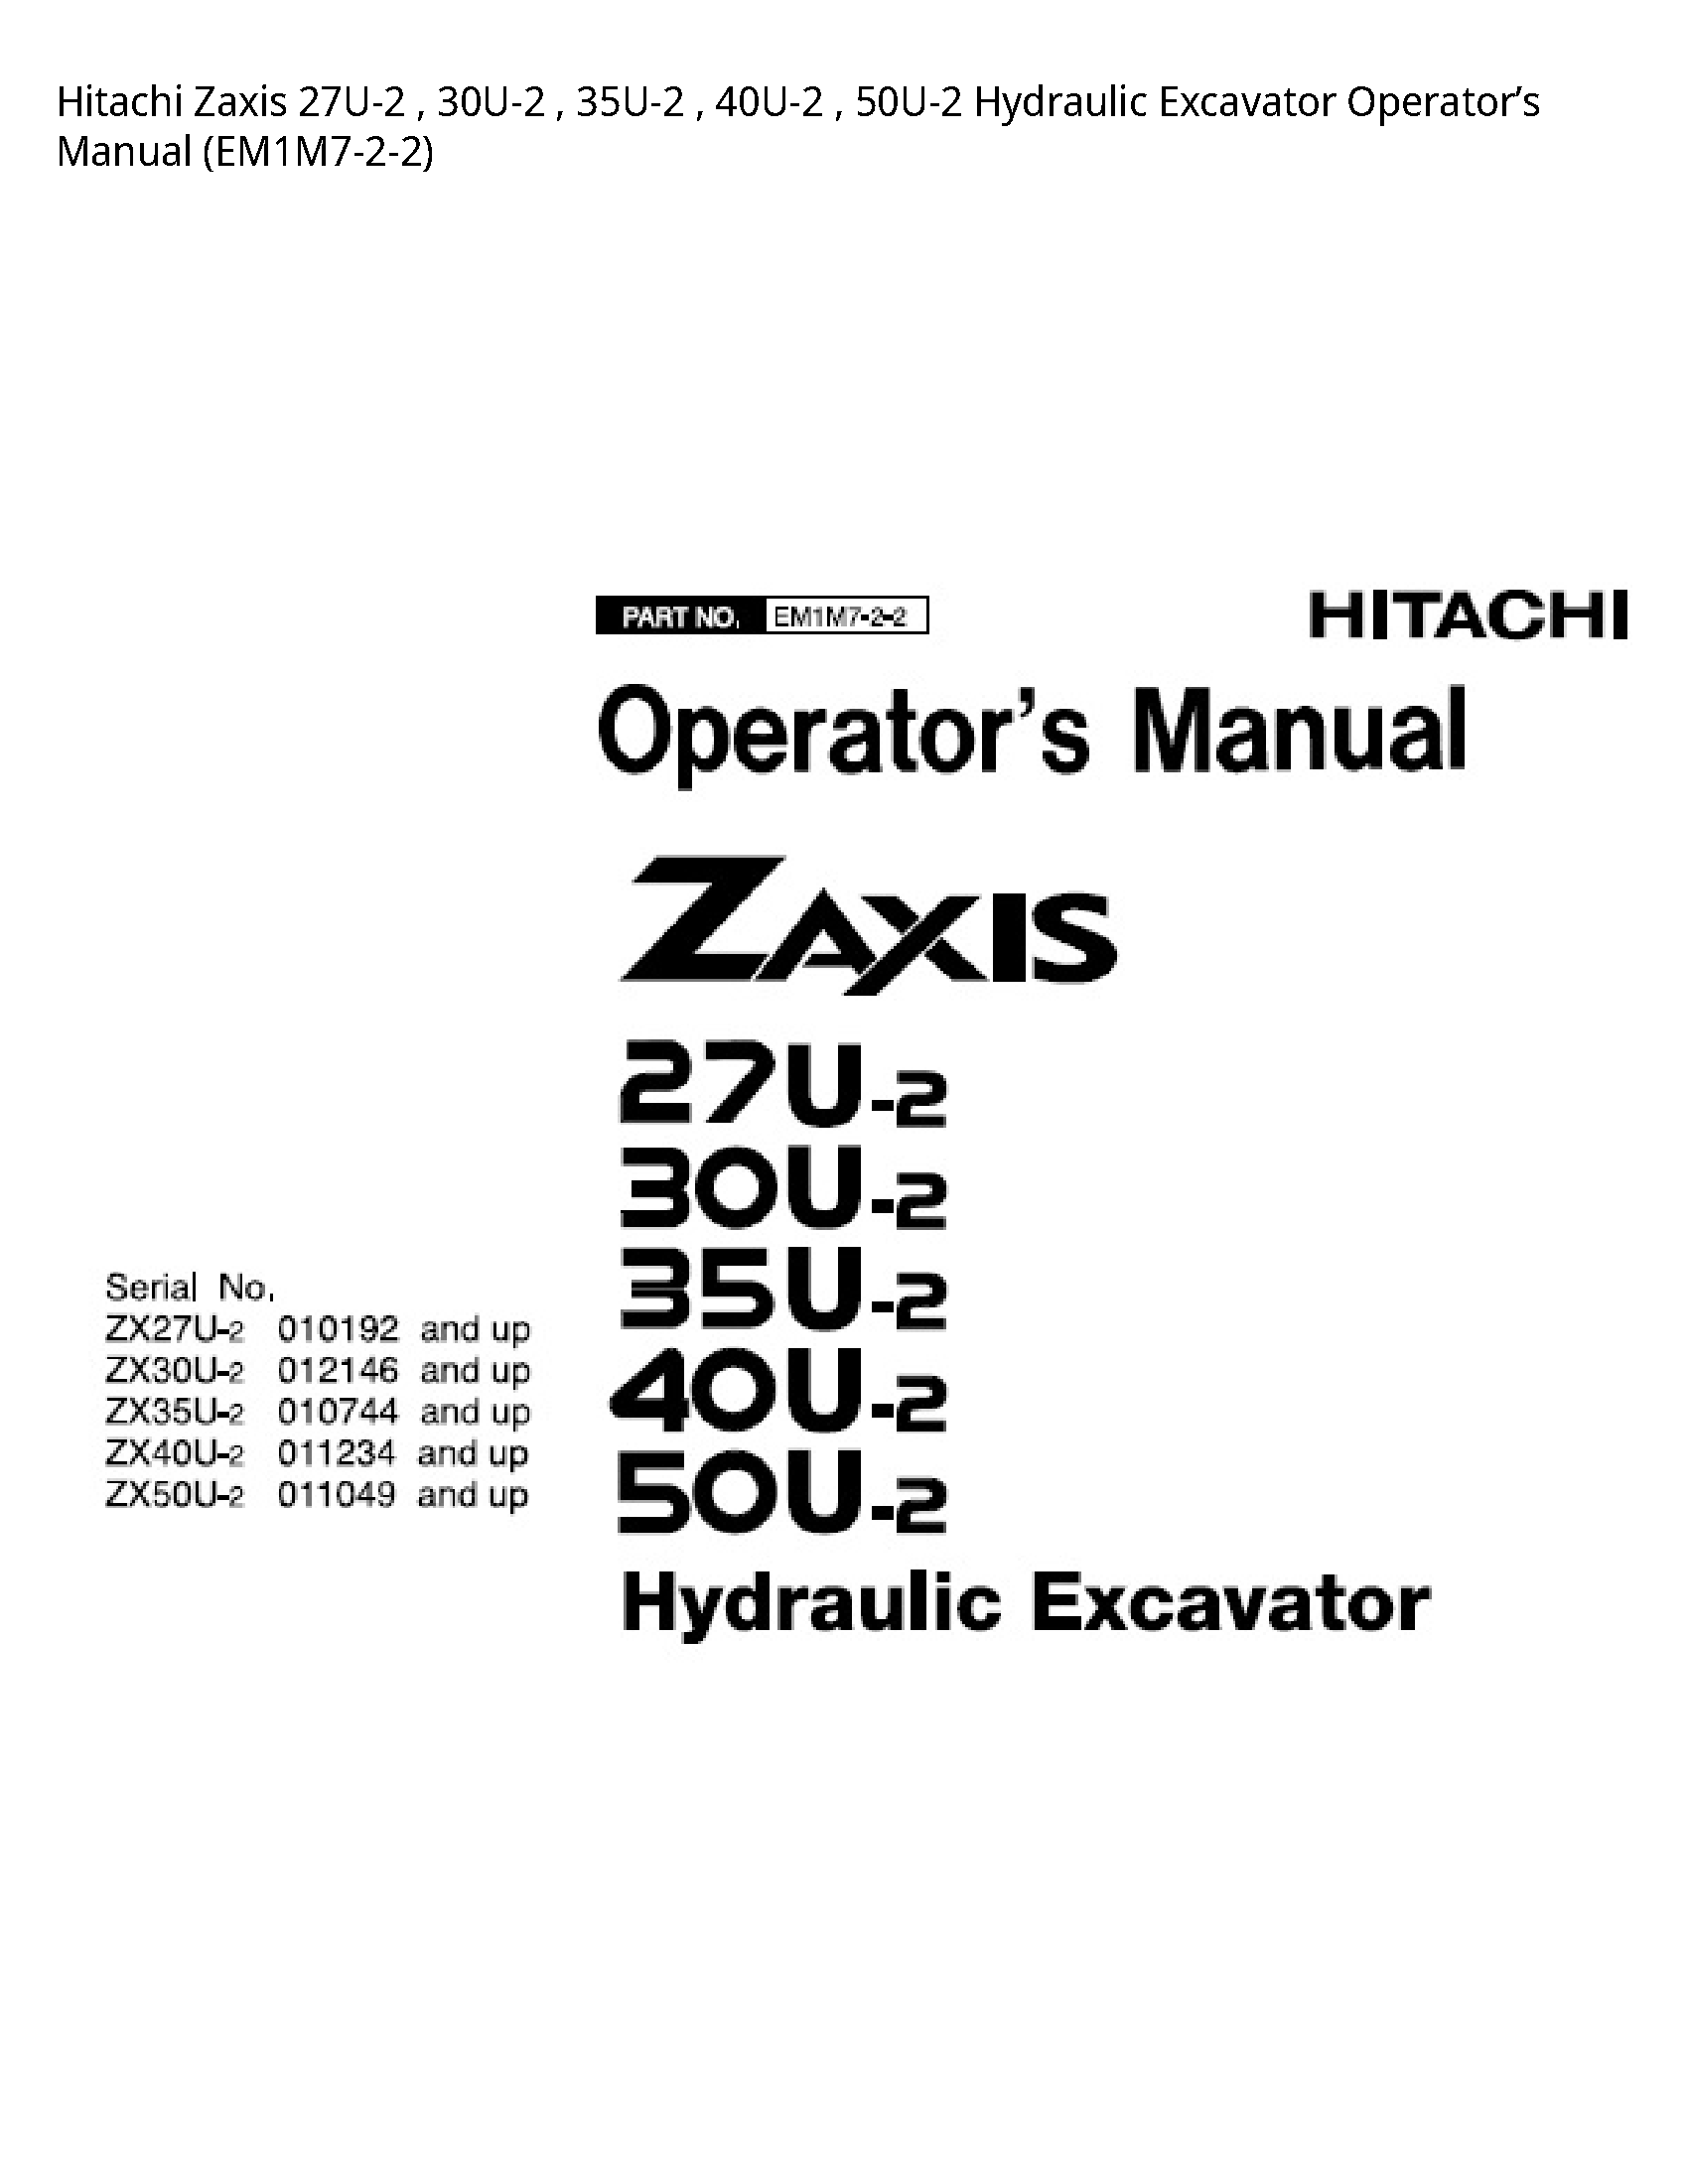 Hitachi 27U-2 Zaxis Hydraulic Excavator Operator’s manual